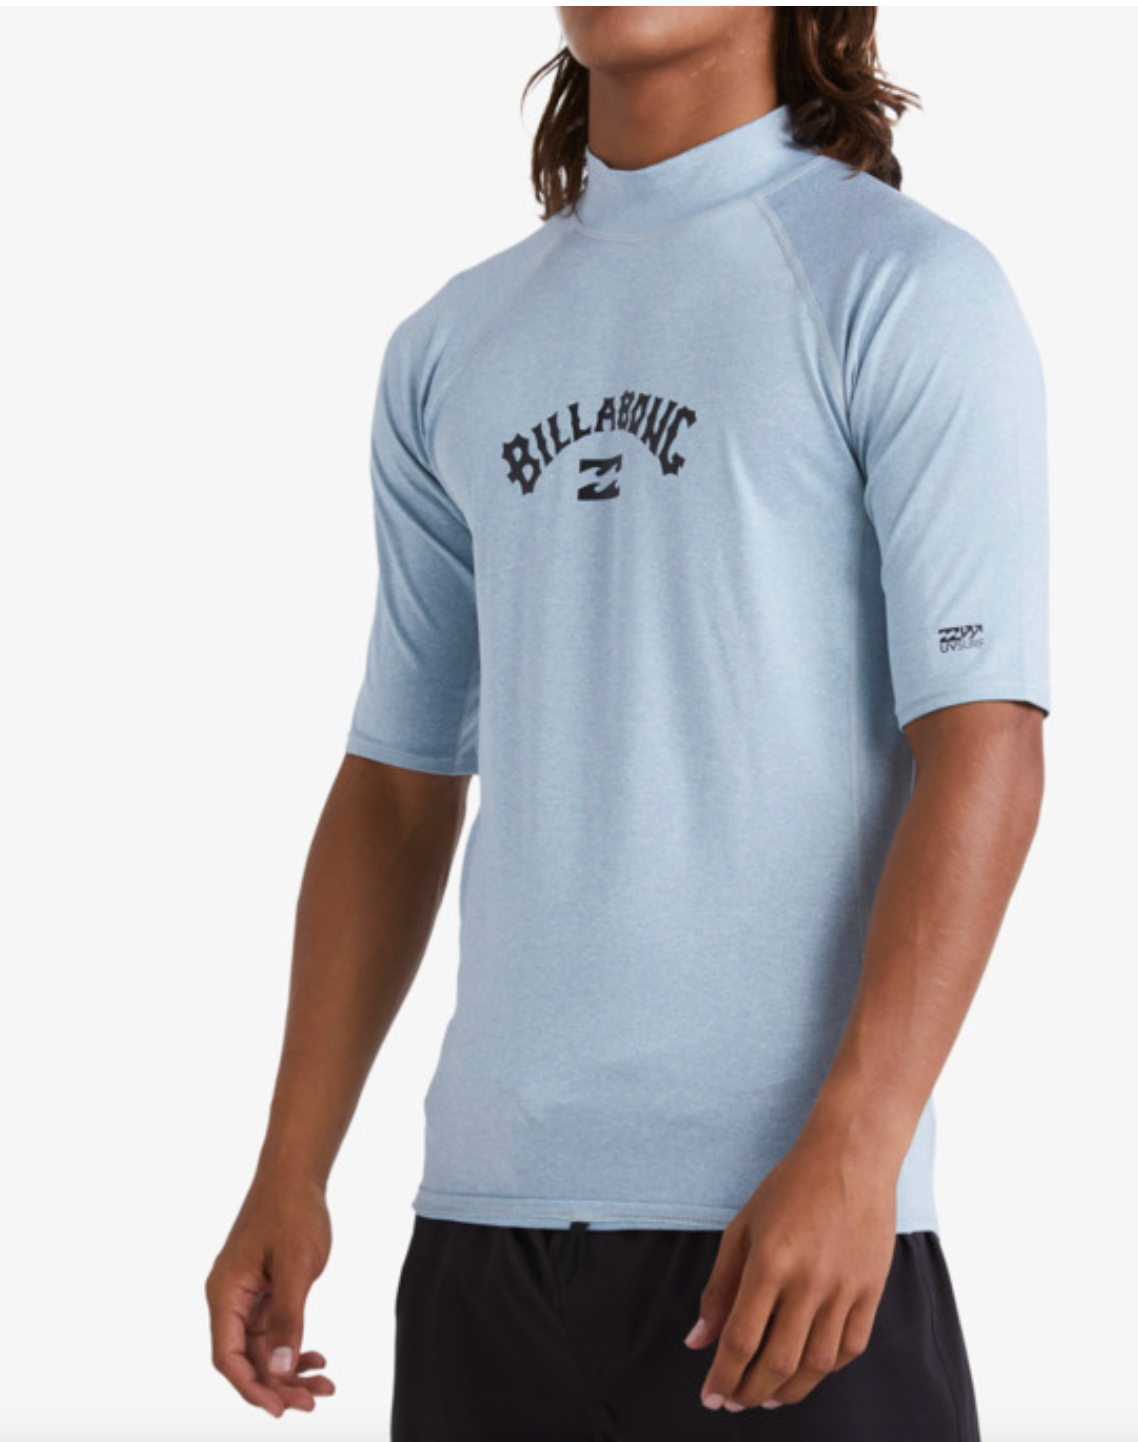 Arch Wave - Short Sleeve UPF 50 Surf T-Shirt for Men